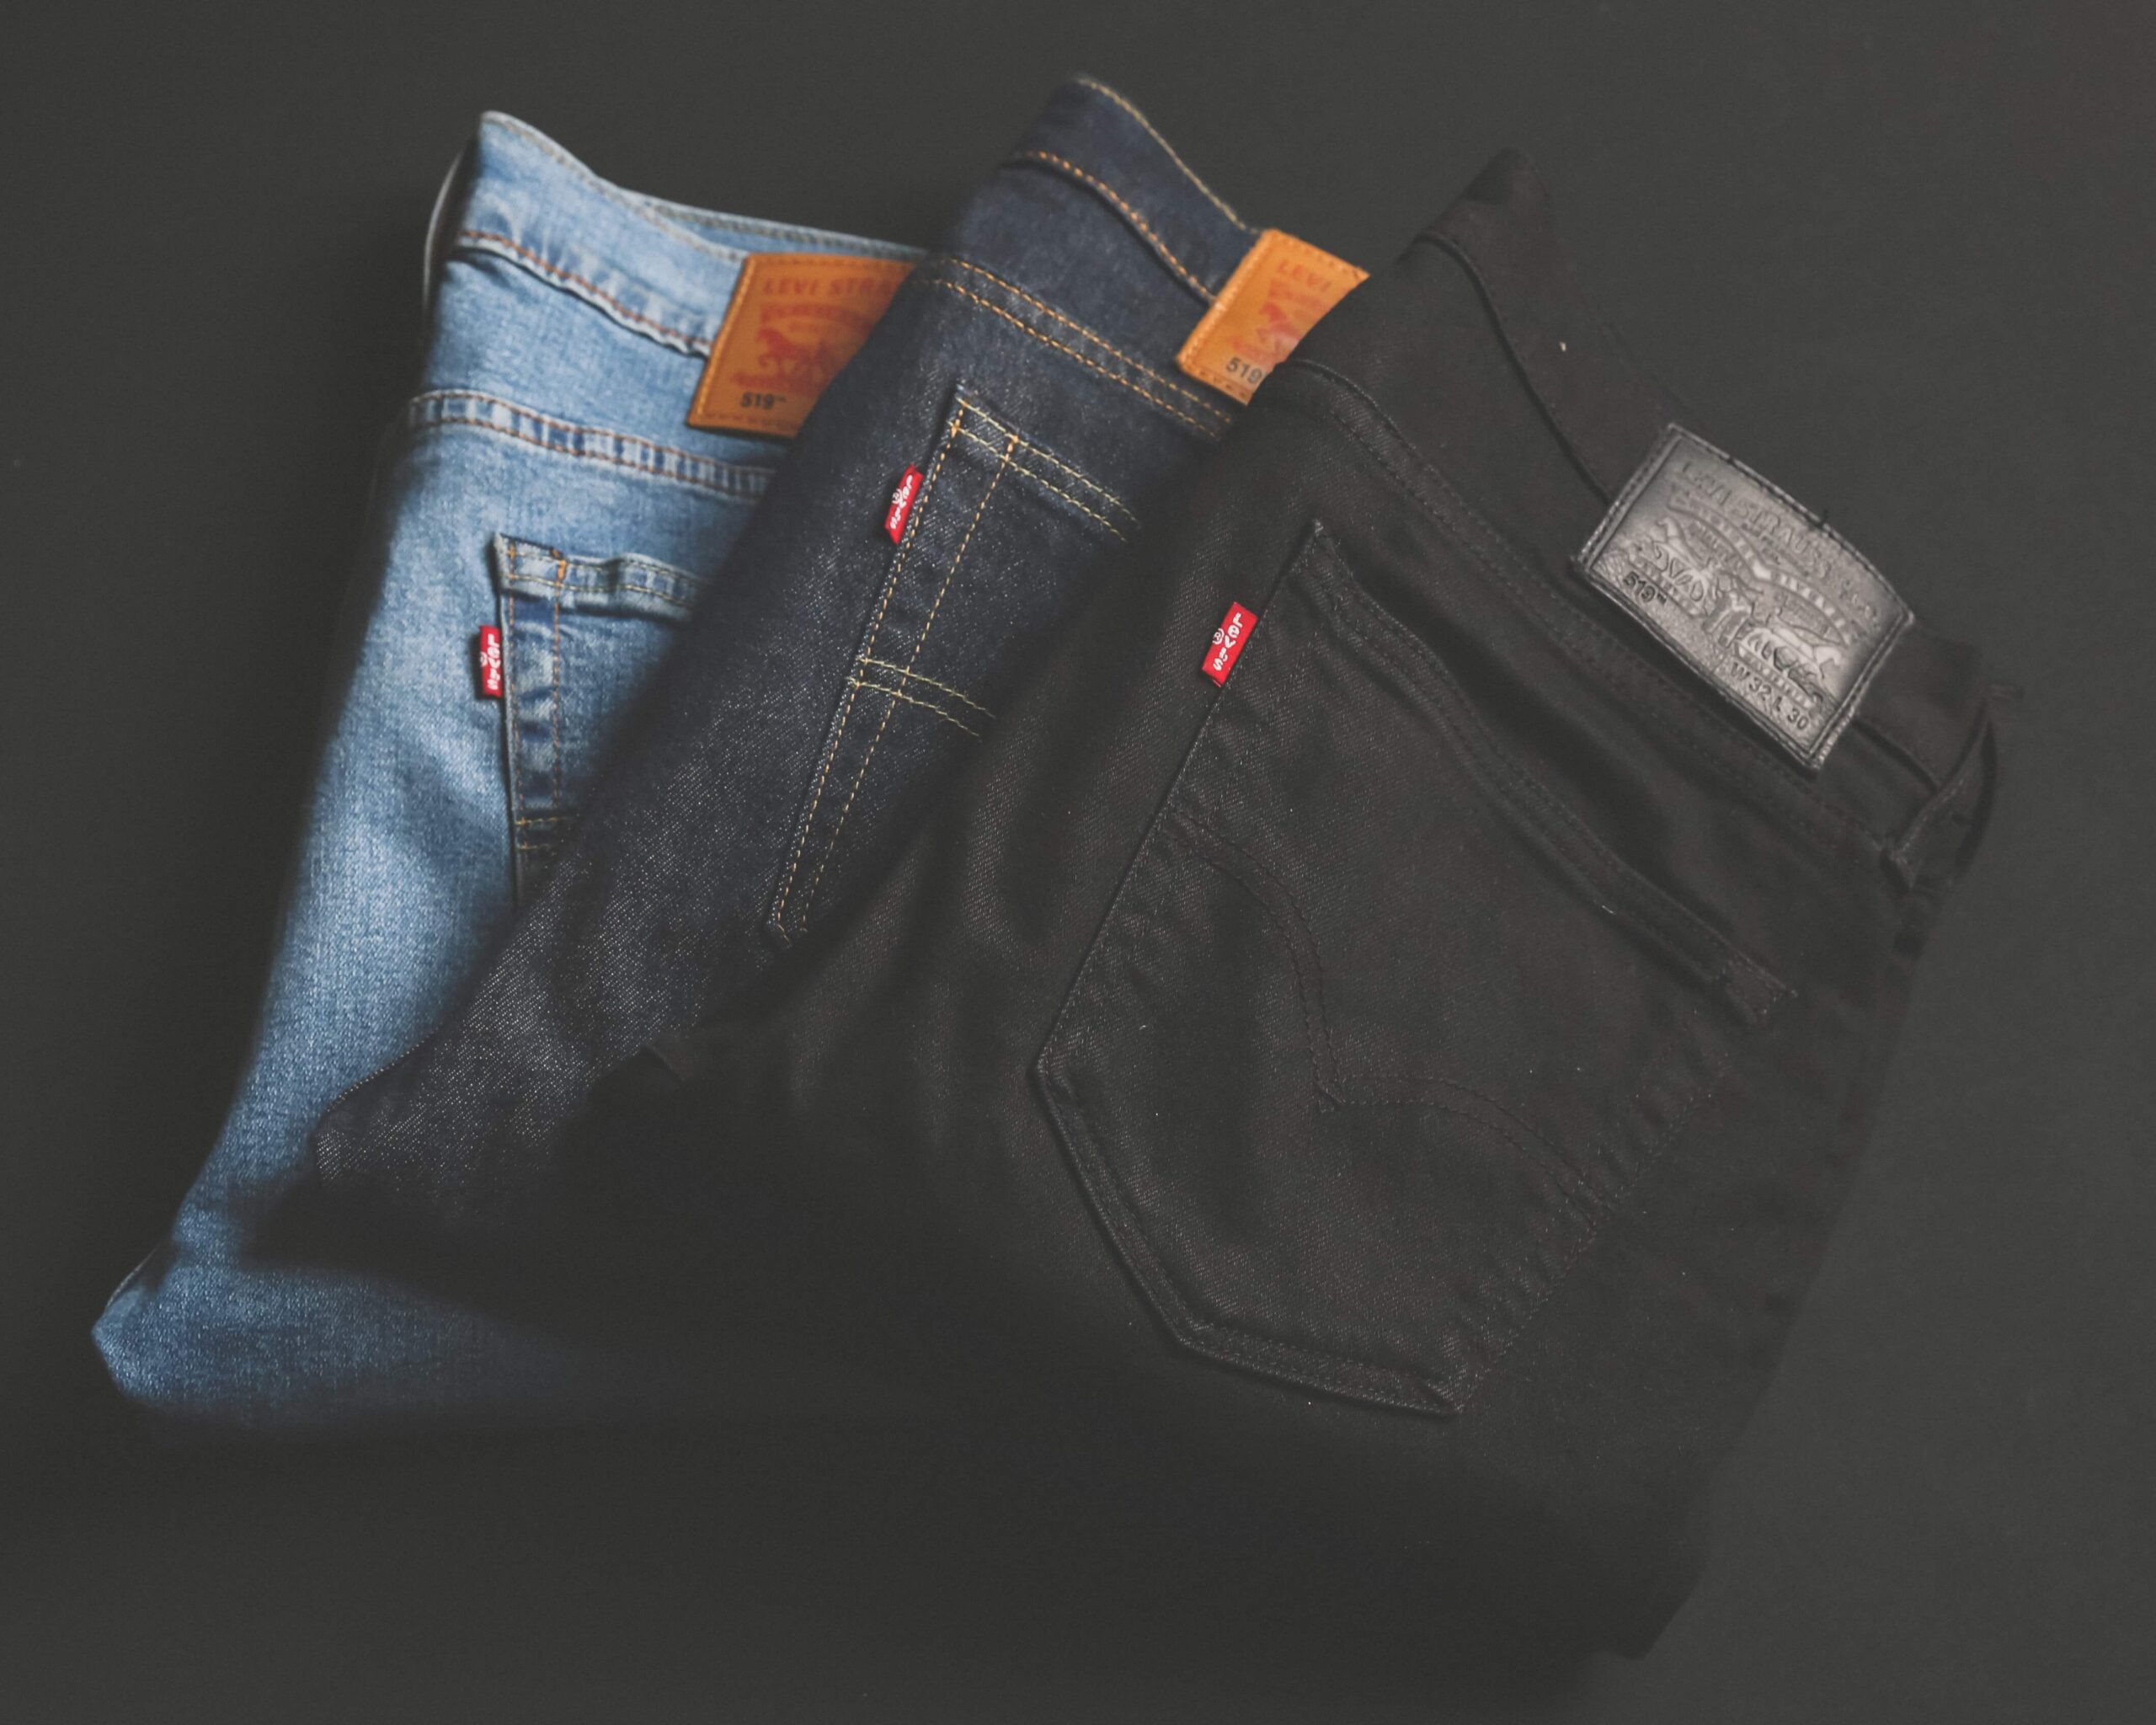 three Levis: black jeans, dark wash jeans, light wash jeans.